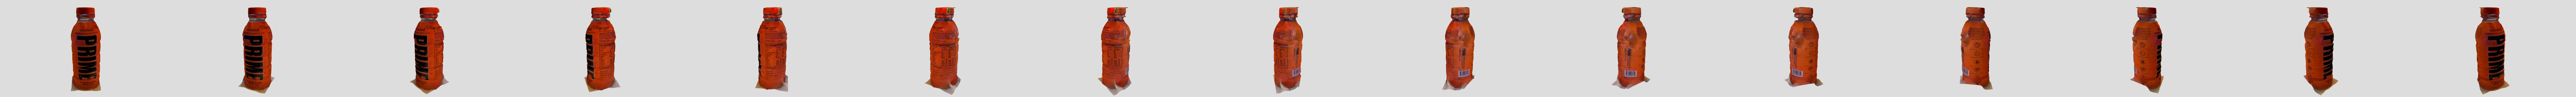 prime hydration - Roblox